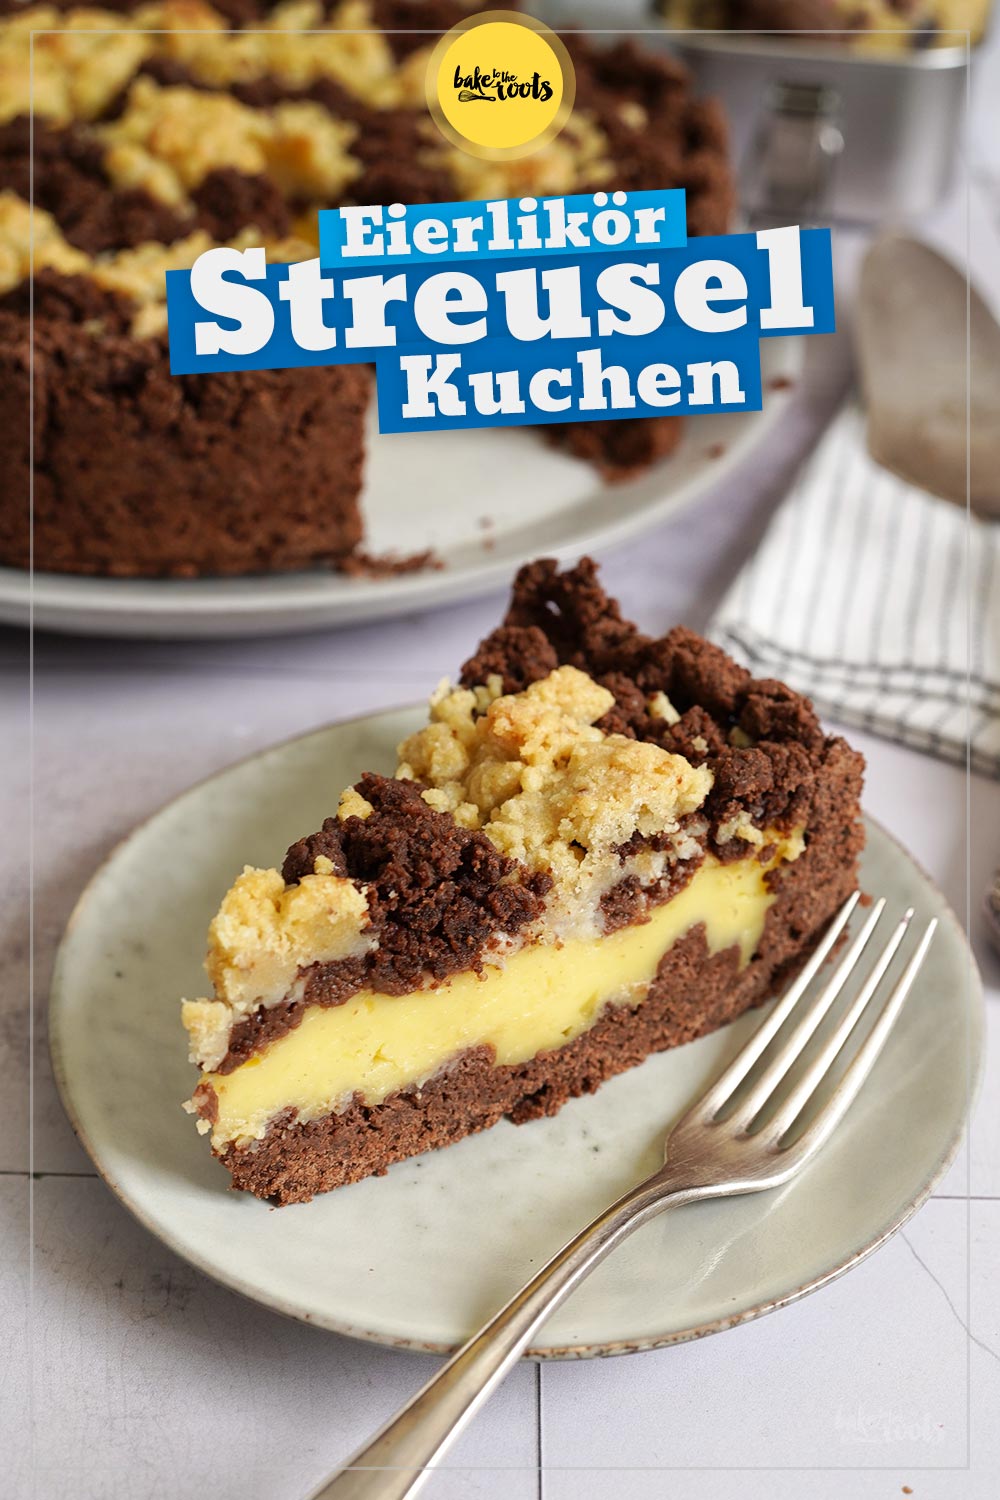 Eierlikör Pudding Streuselkuchen | Bake to the roots